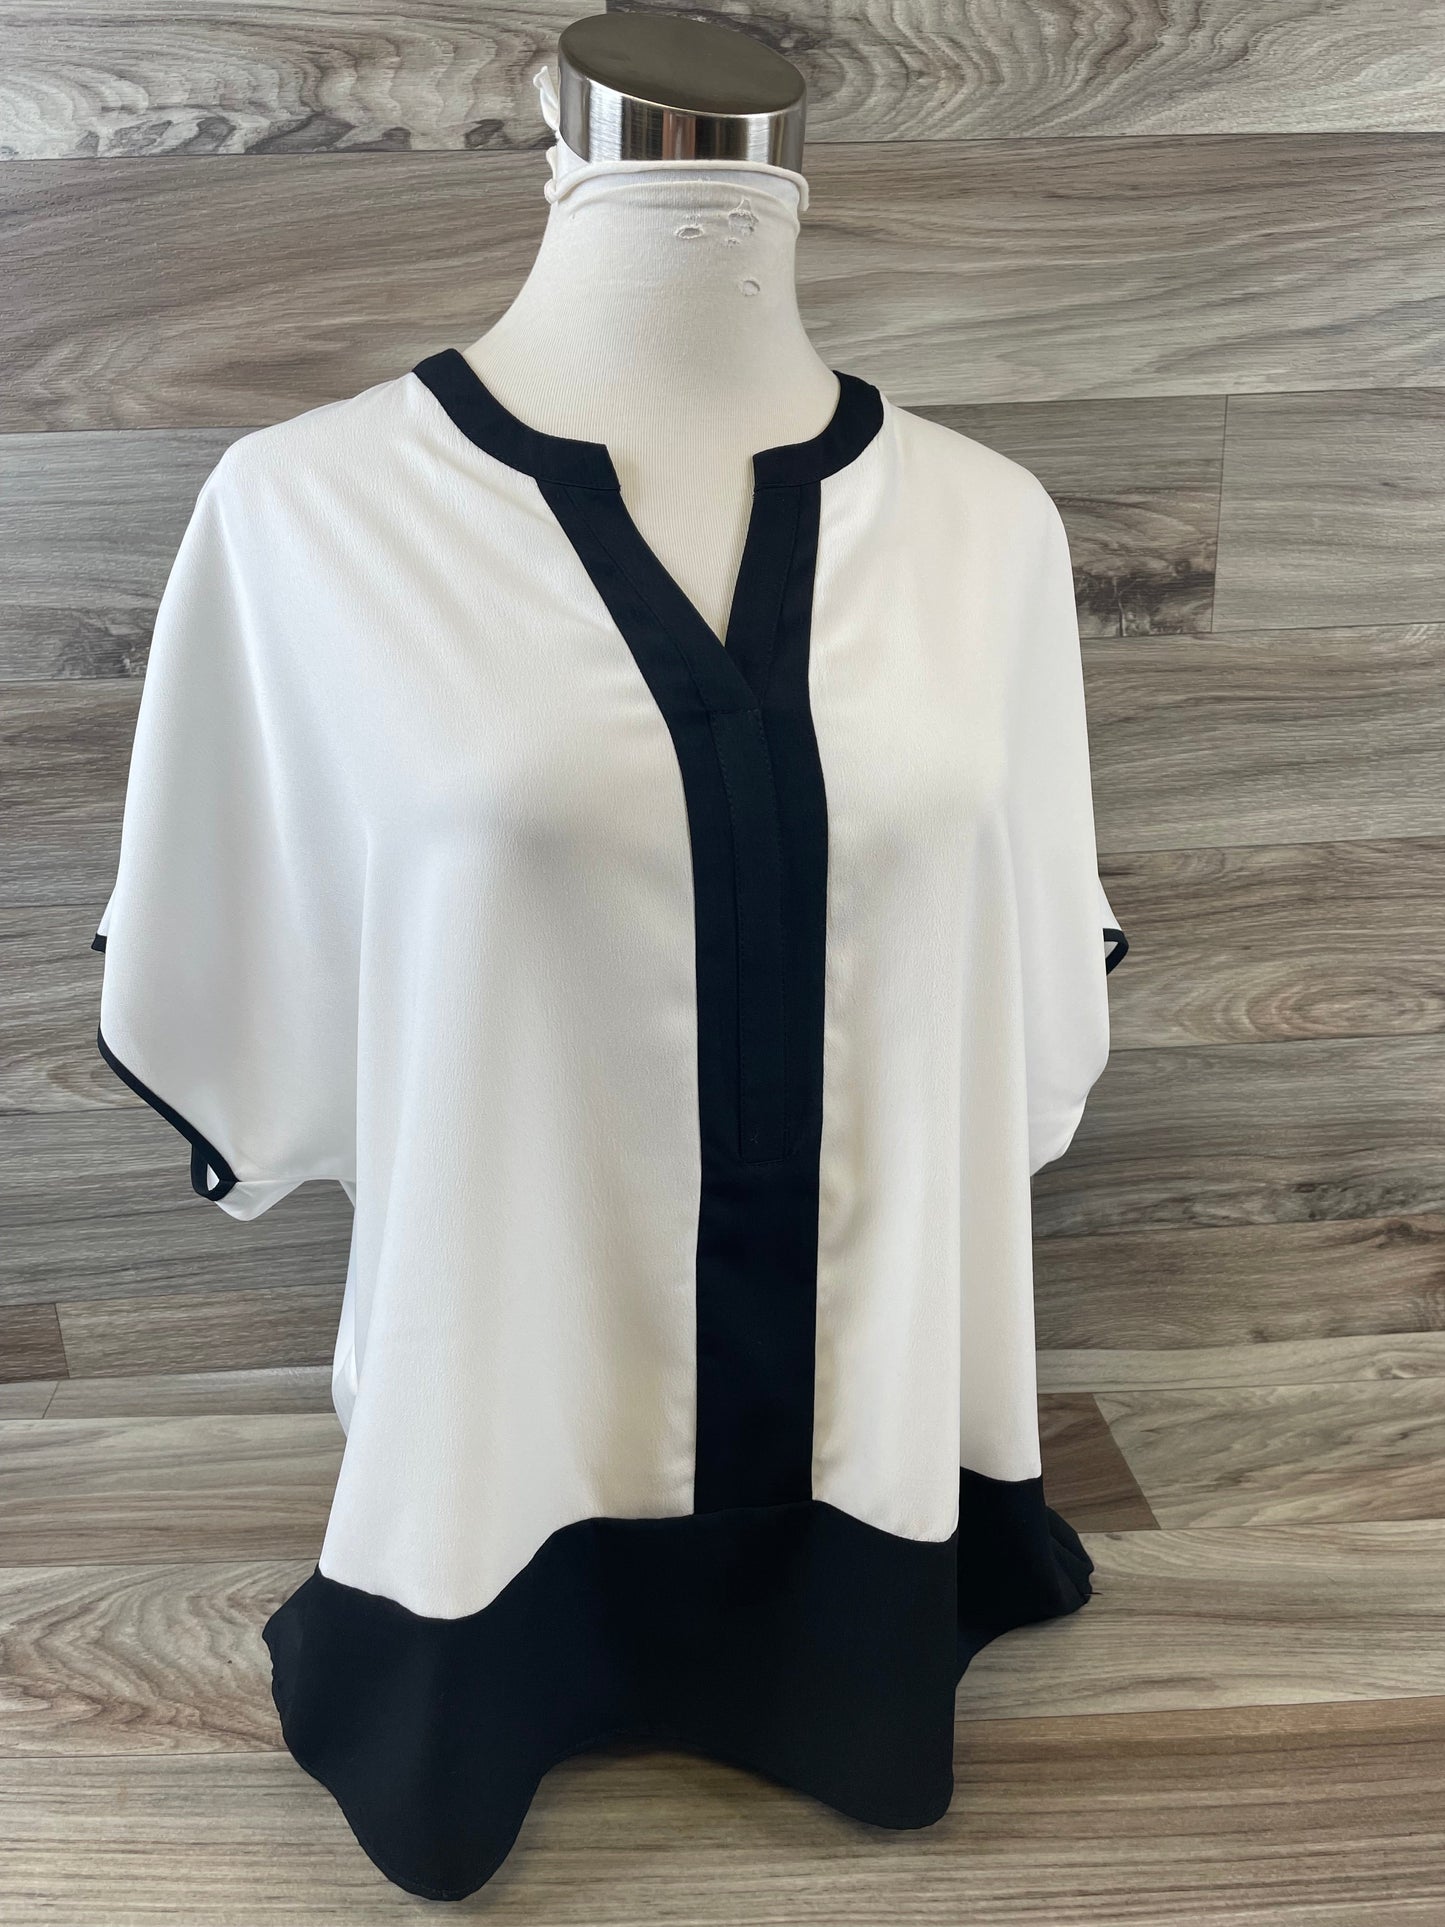 Black & White Top Short Sleeve Basic Dana Buchman, Size M